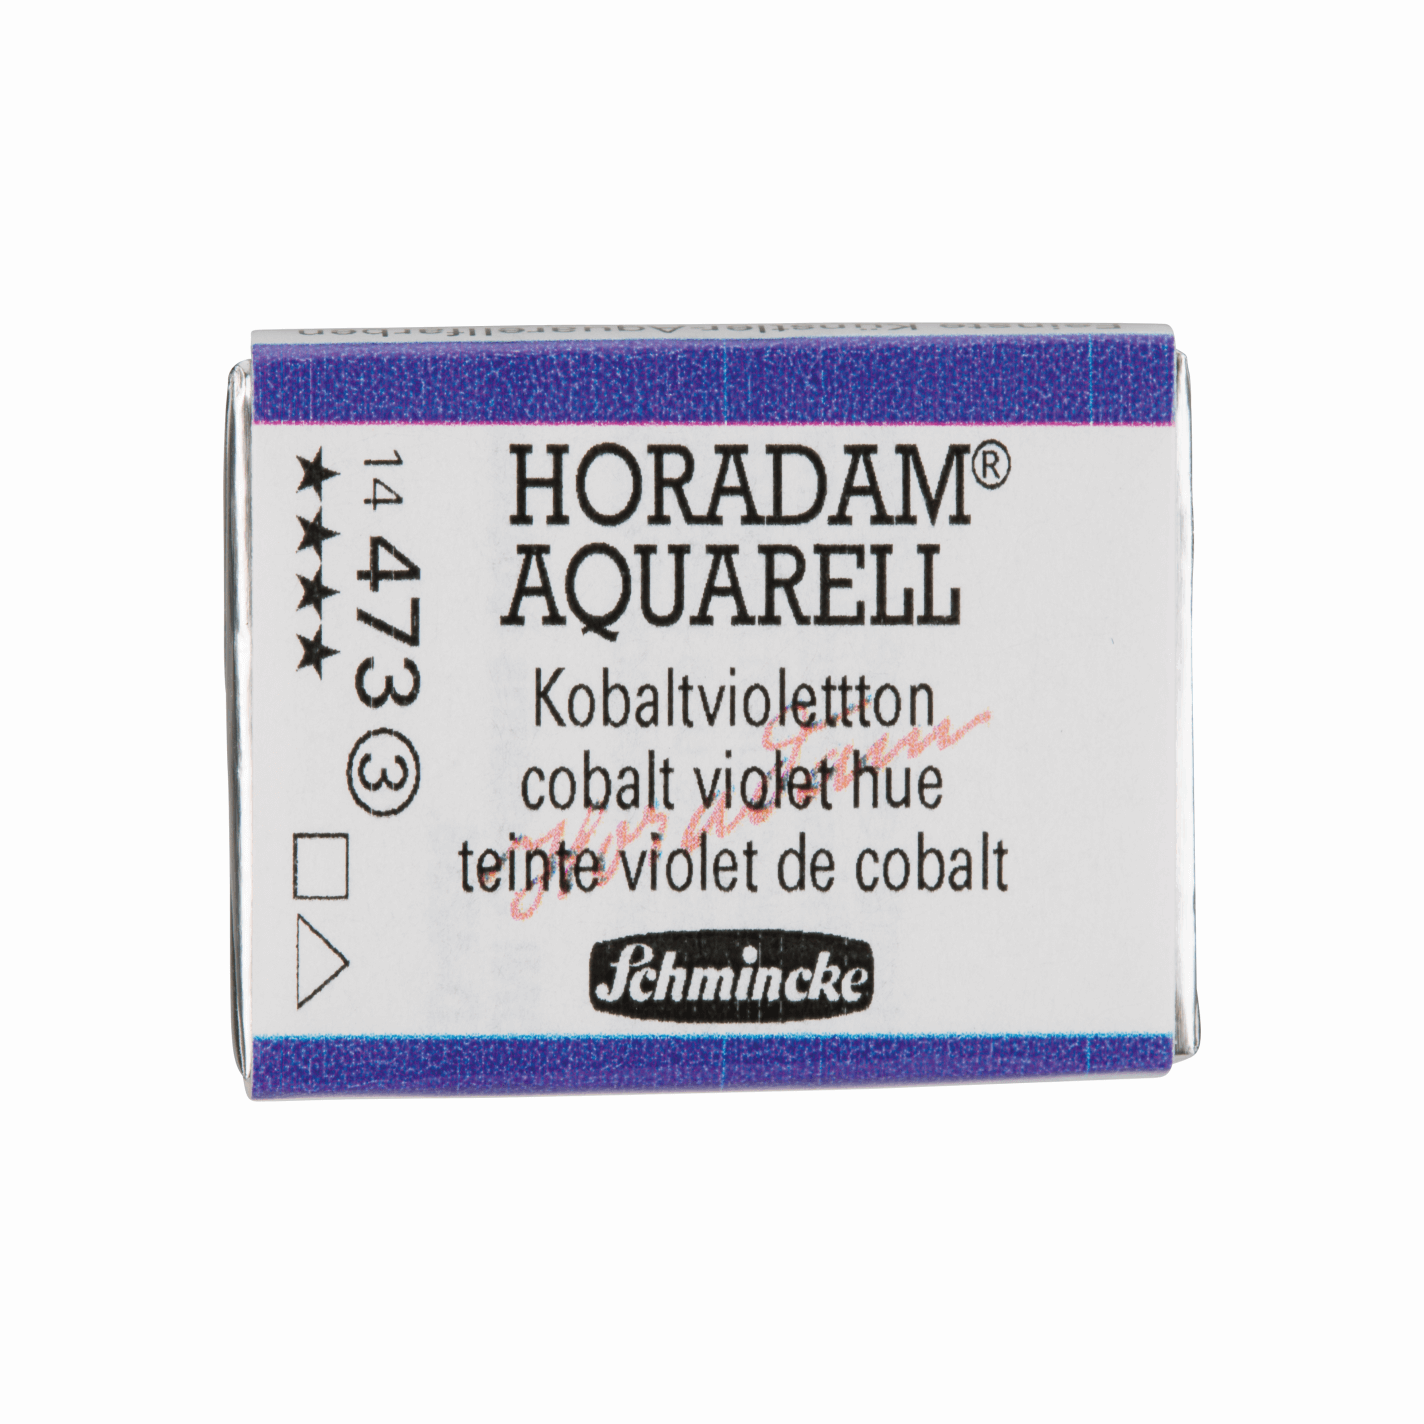 Schmincke Horadam Aquarell pans 1/1 pan Cobalt Violet Hue